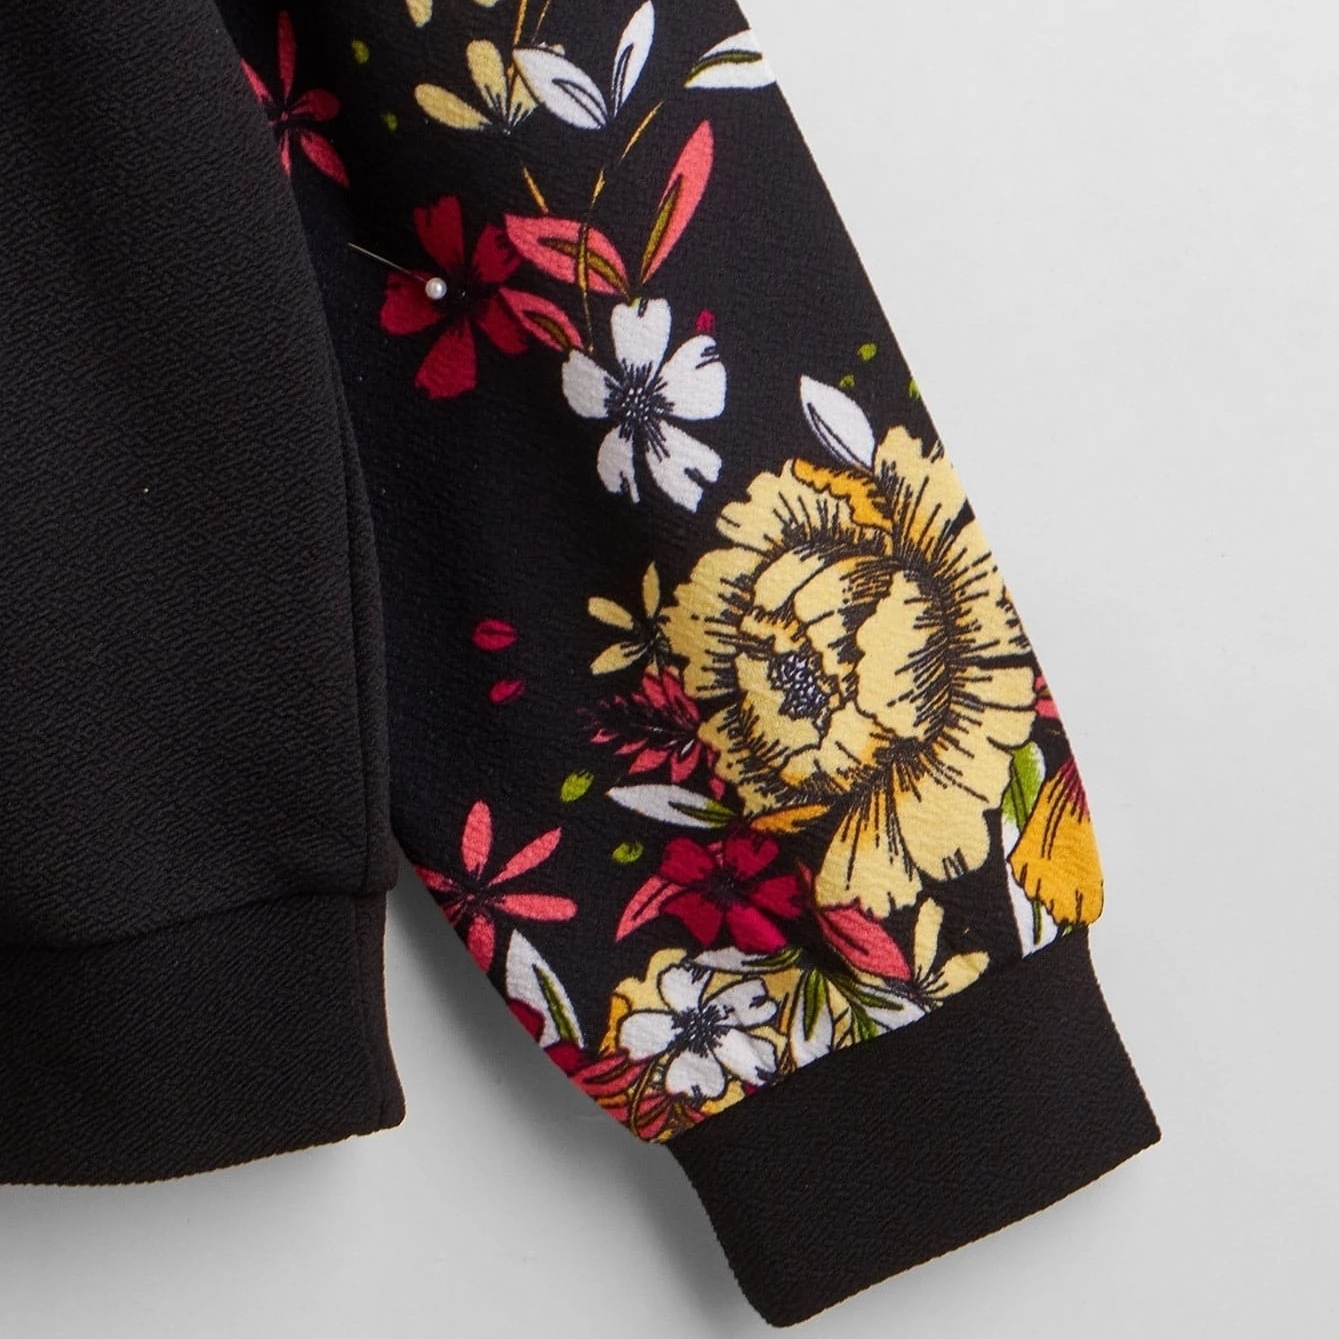 Floral Print Raglan Sleeve Pullover - Small(2)